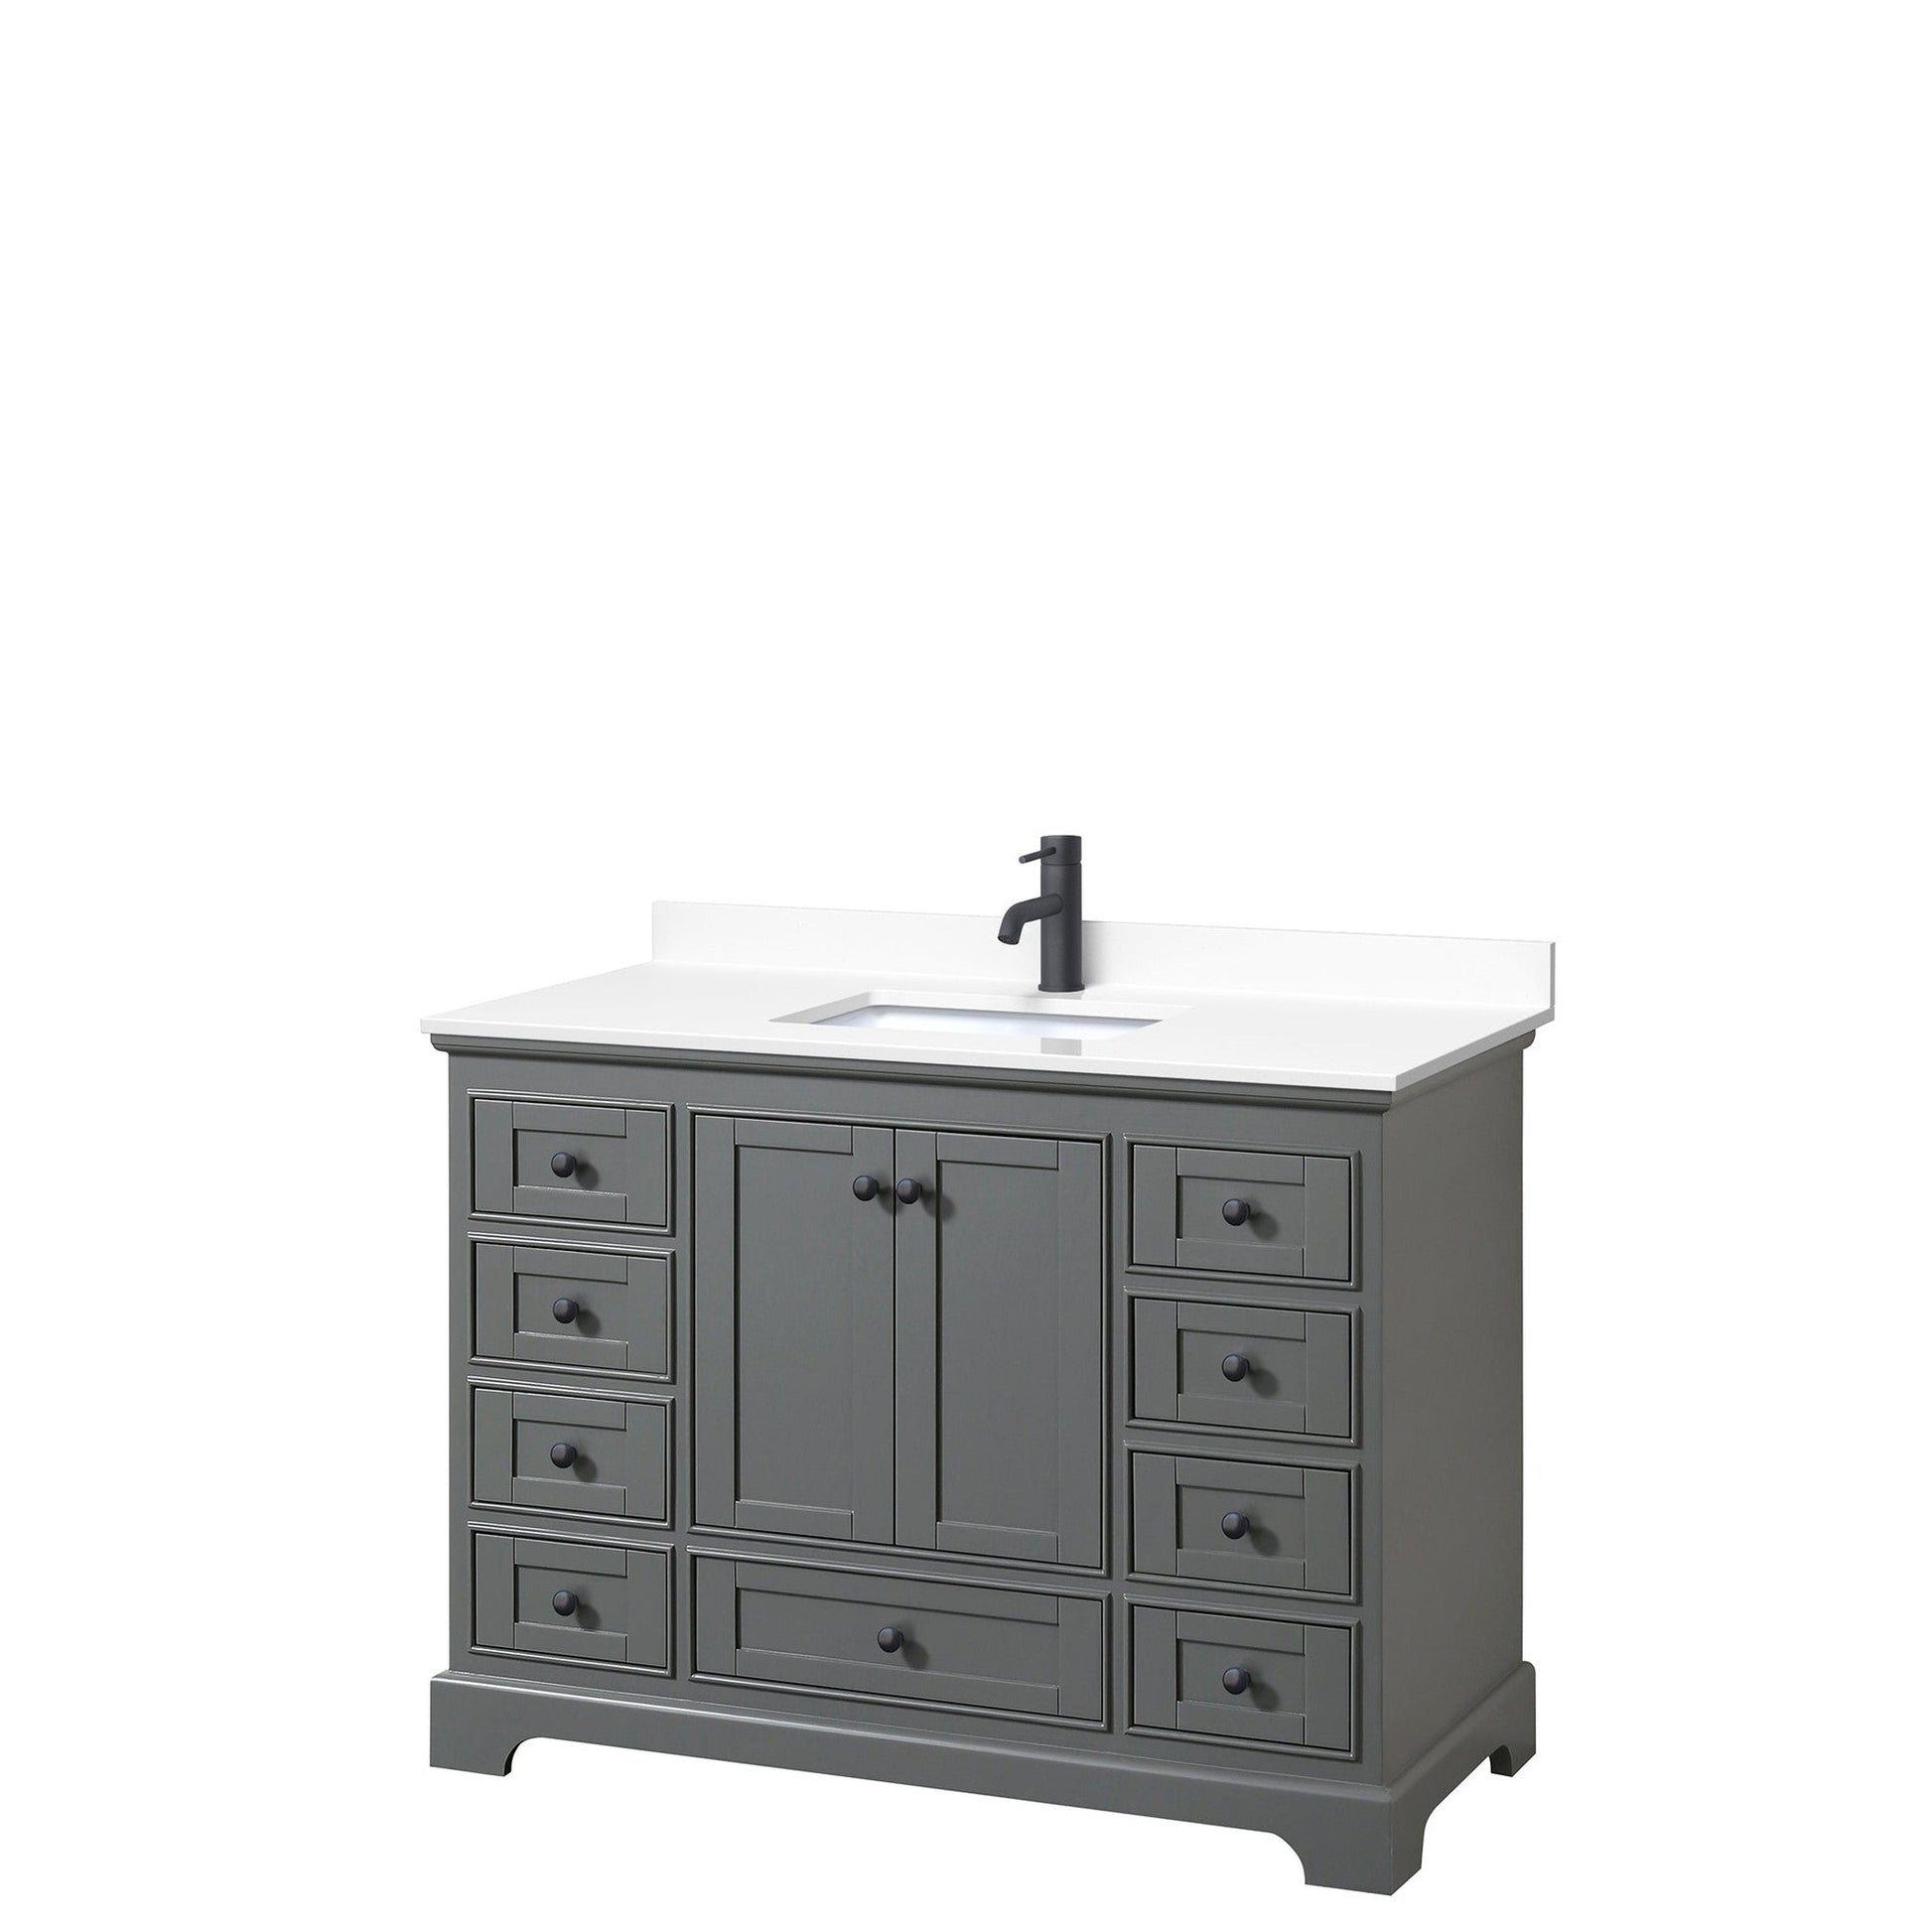 Deborah 48" Single Bathroom Vanity in Dark Gray, White Cultured Marble Countertop, Undermount Square Sink, Matte Black Trim